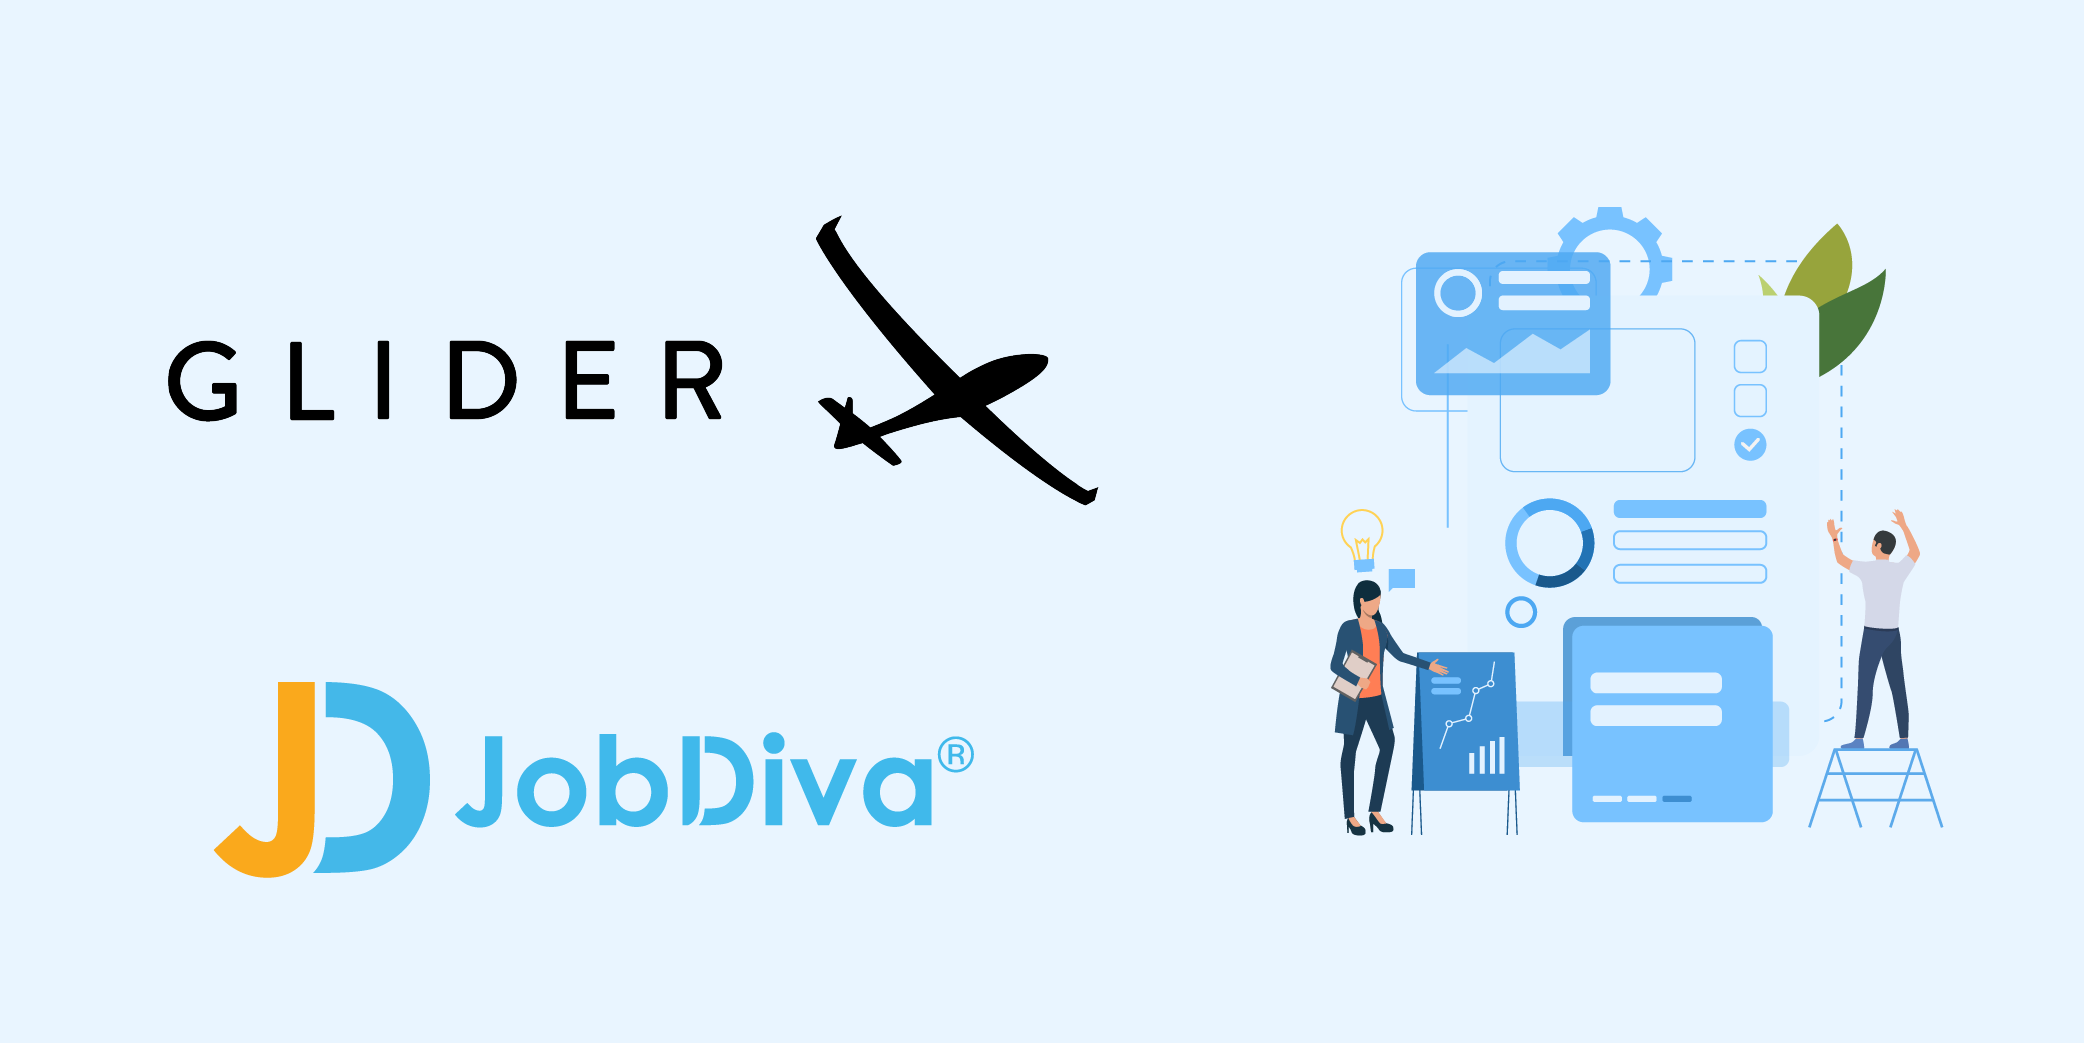 JobDiva and Glider